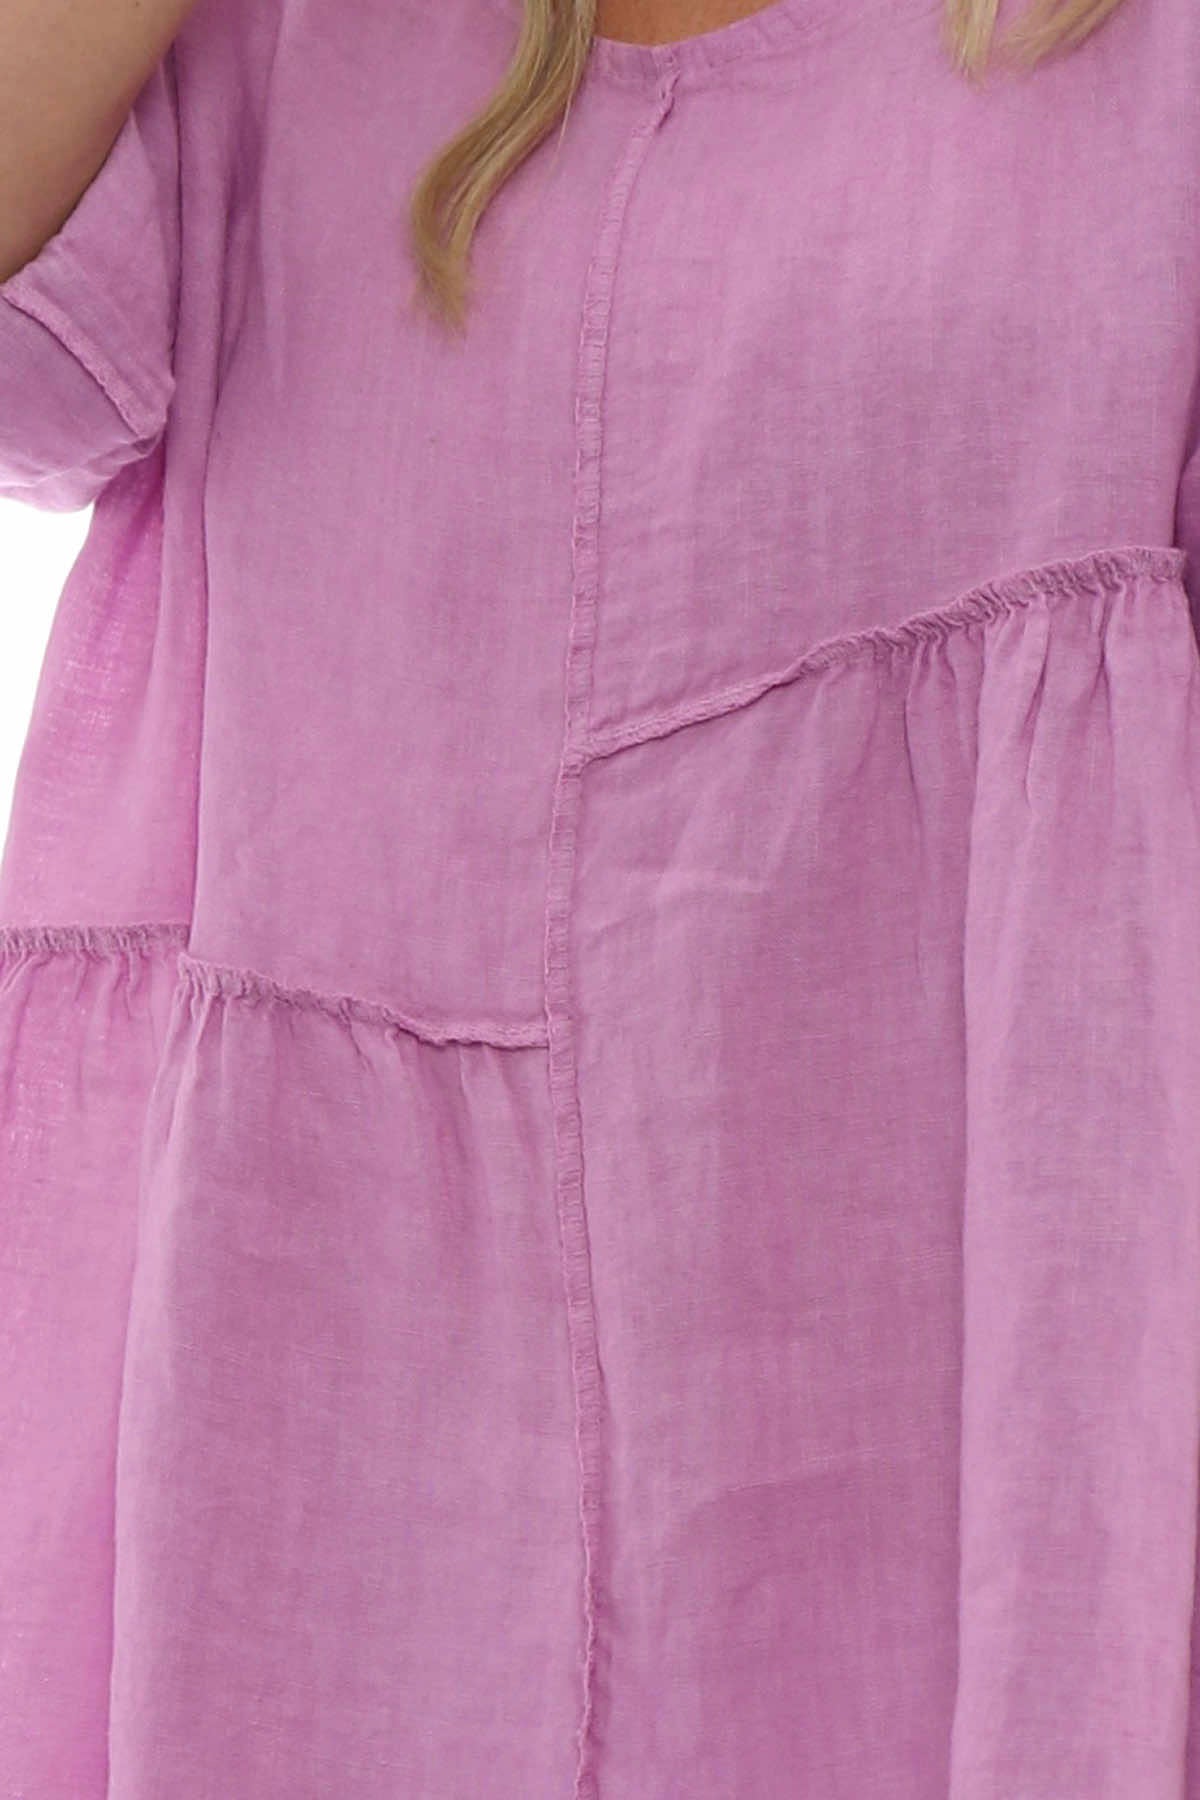 Langford Linen Tunic Dress Lilac